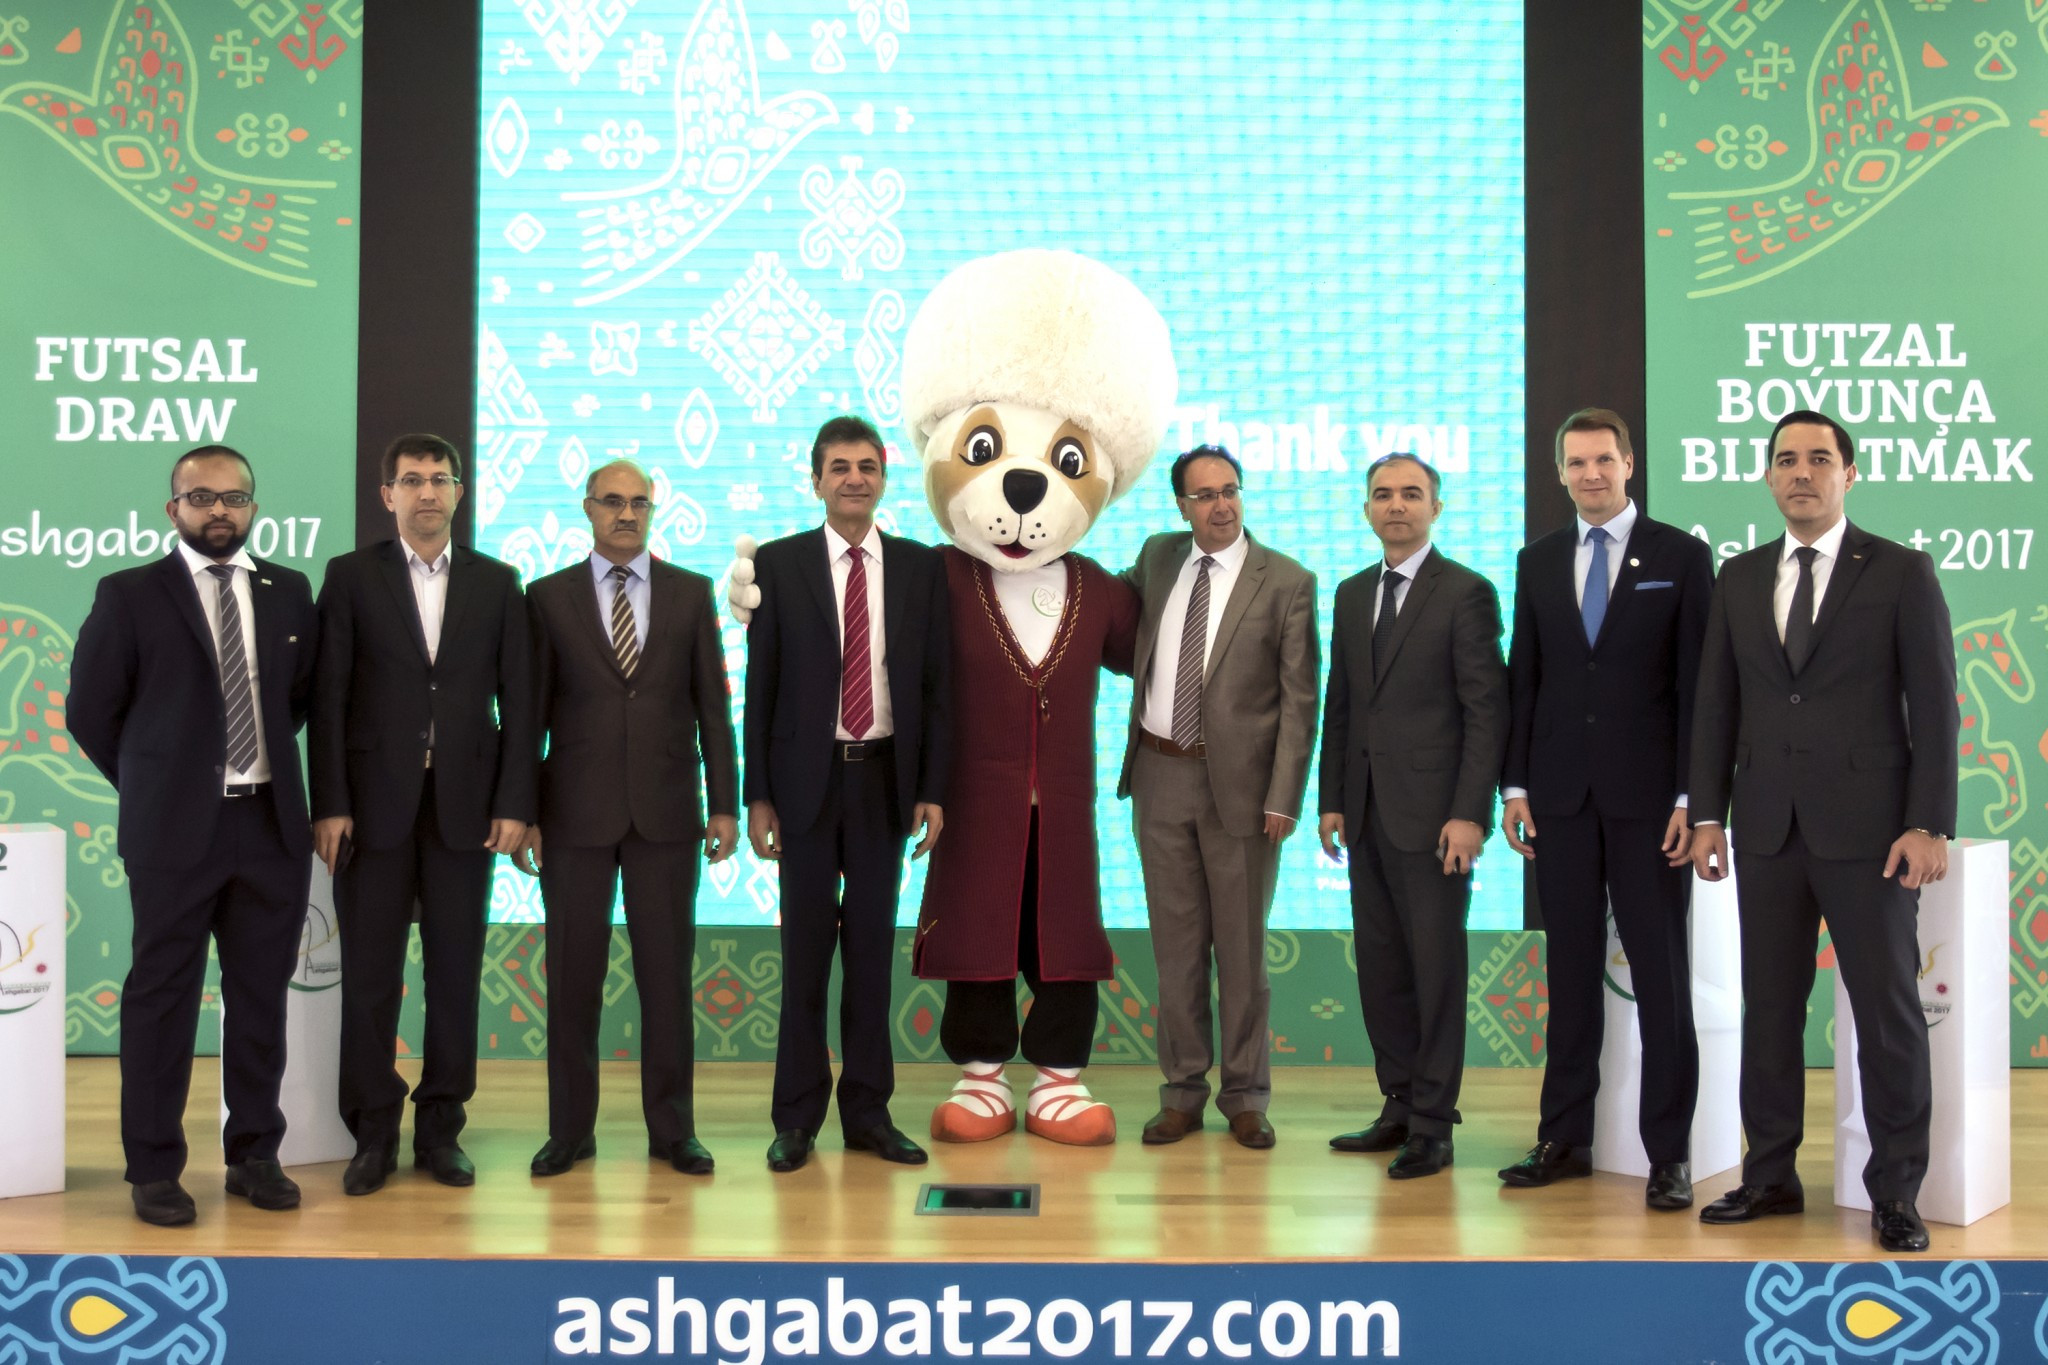 The draw was conducted at the Ashgabat 2017 headquarters ©Ashgabat 2017